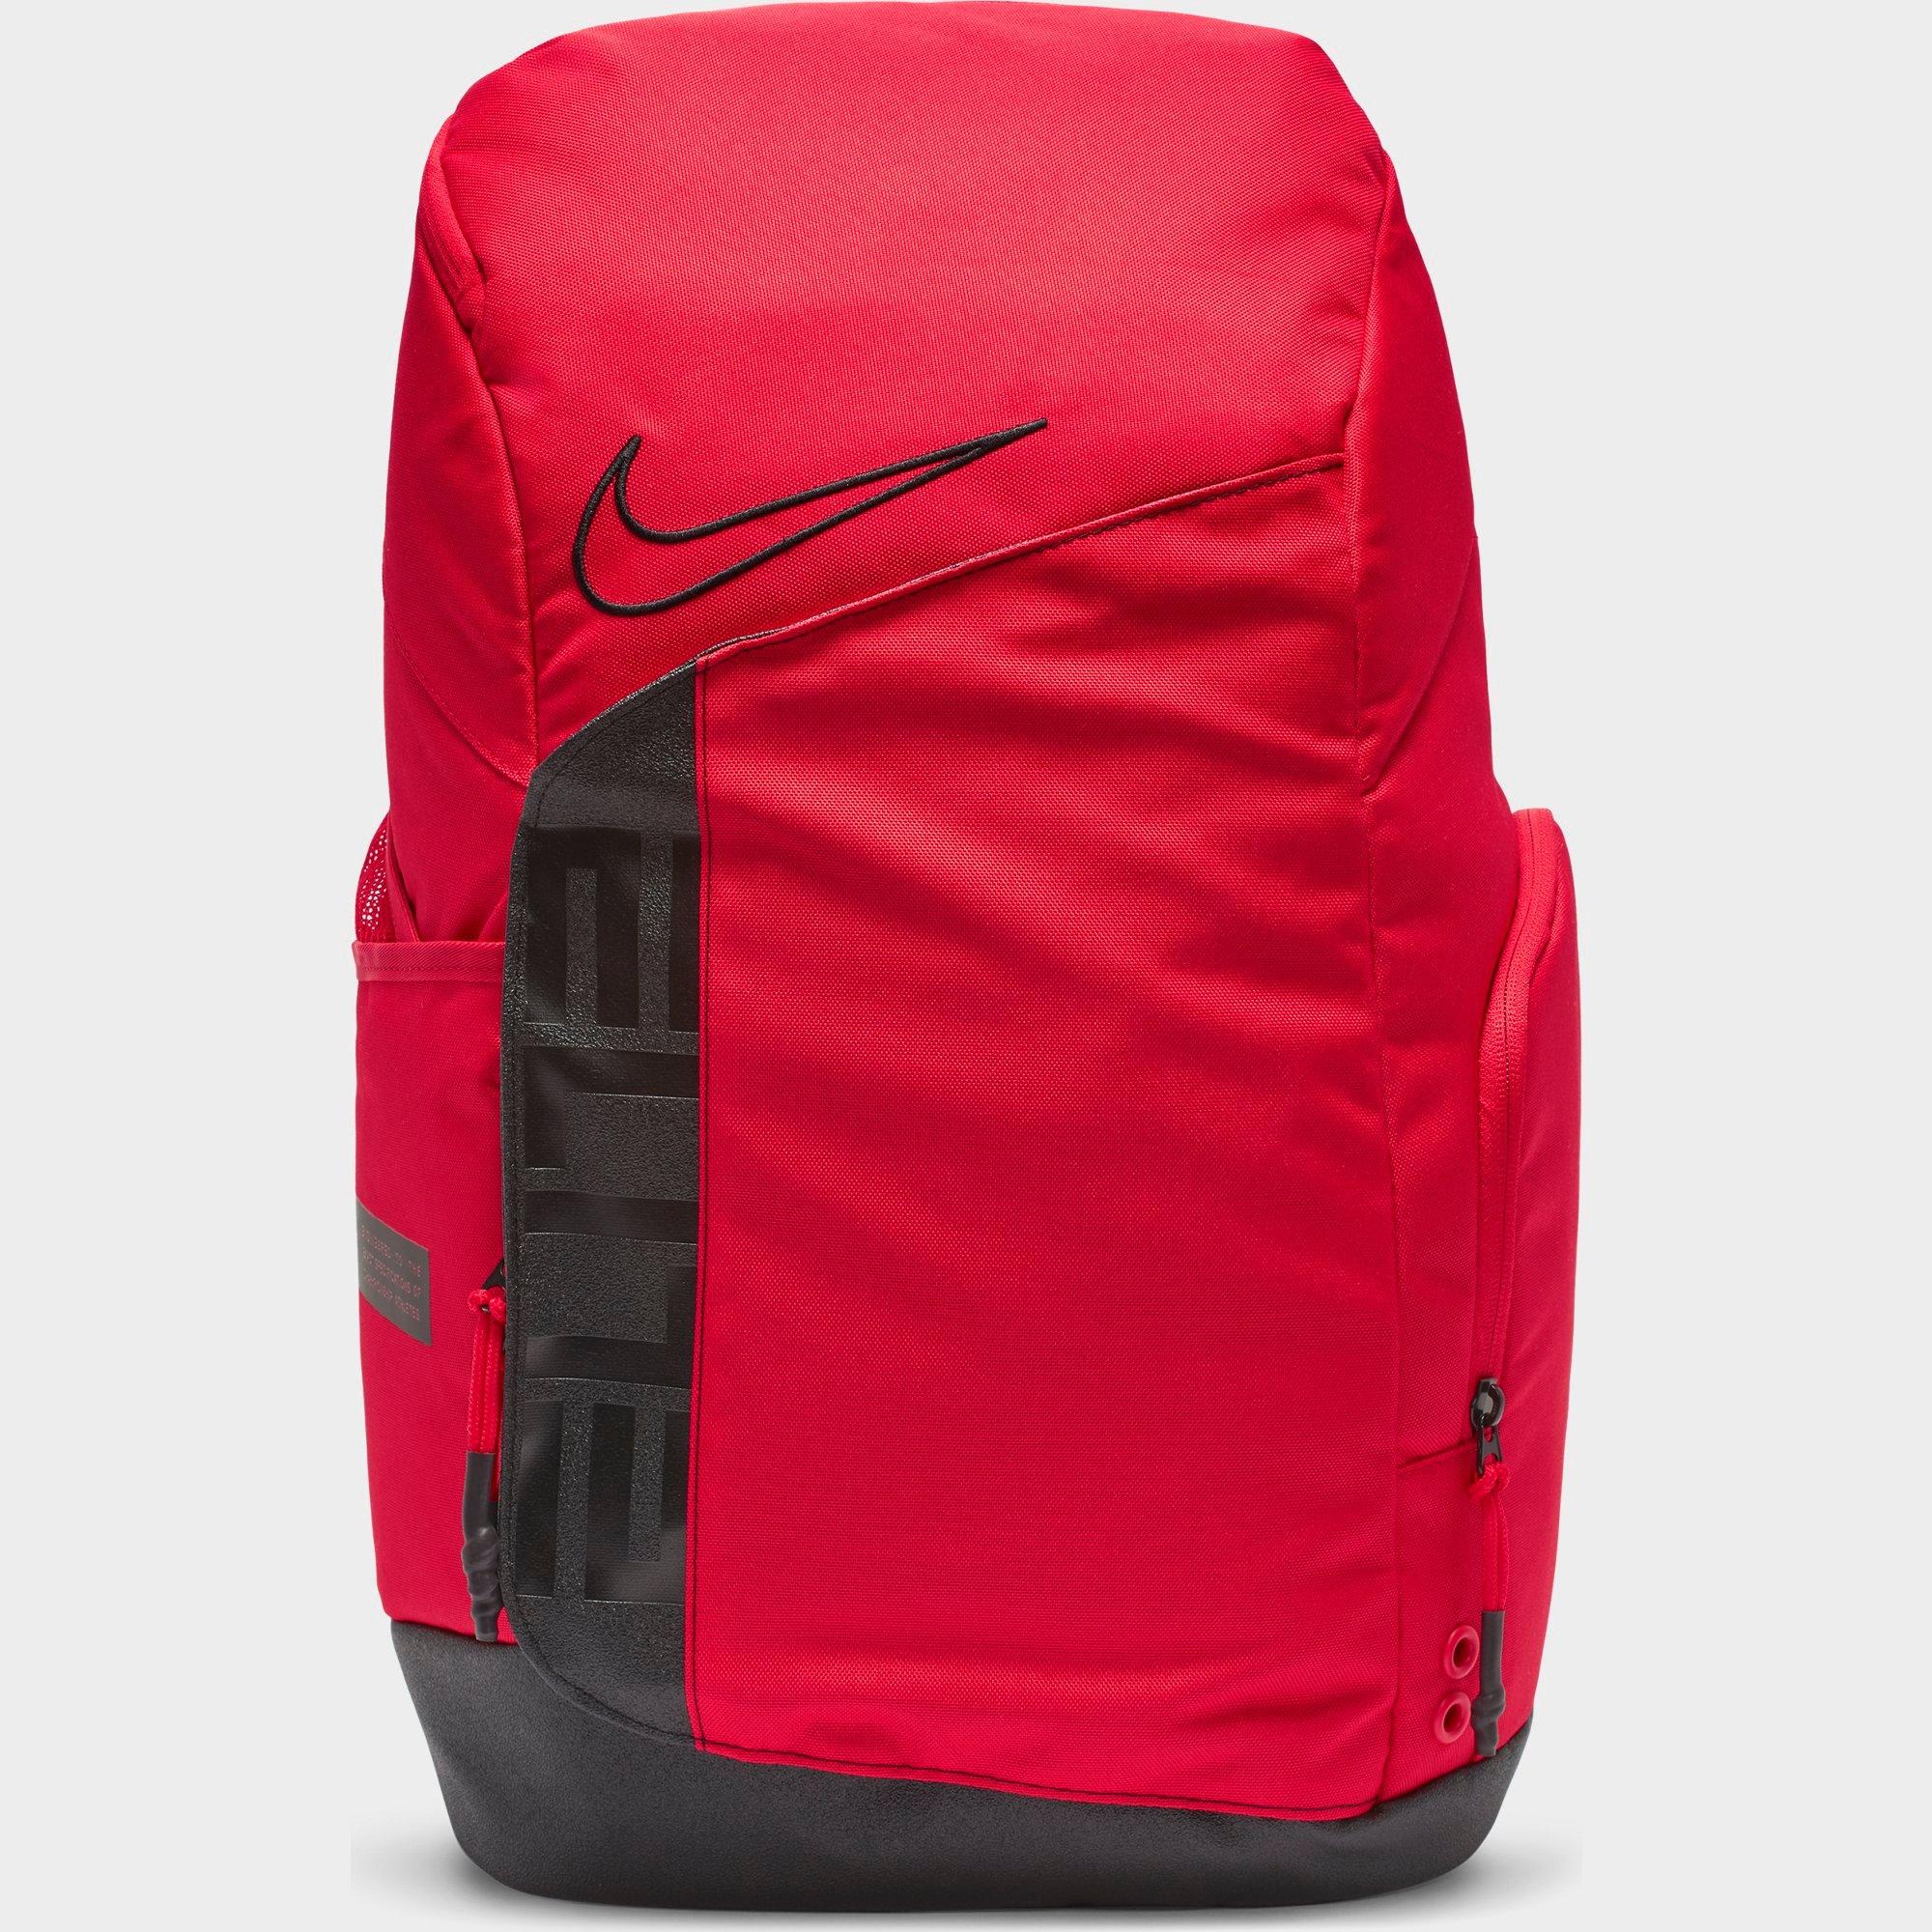 nike elite backpack pink